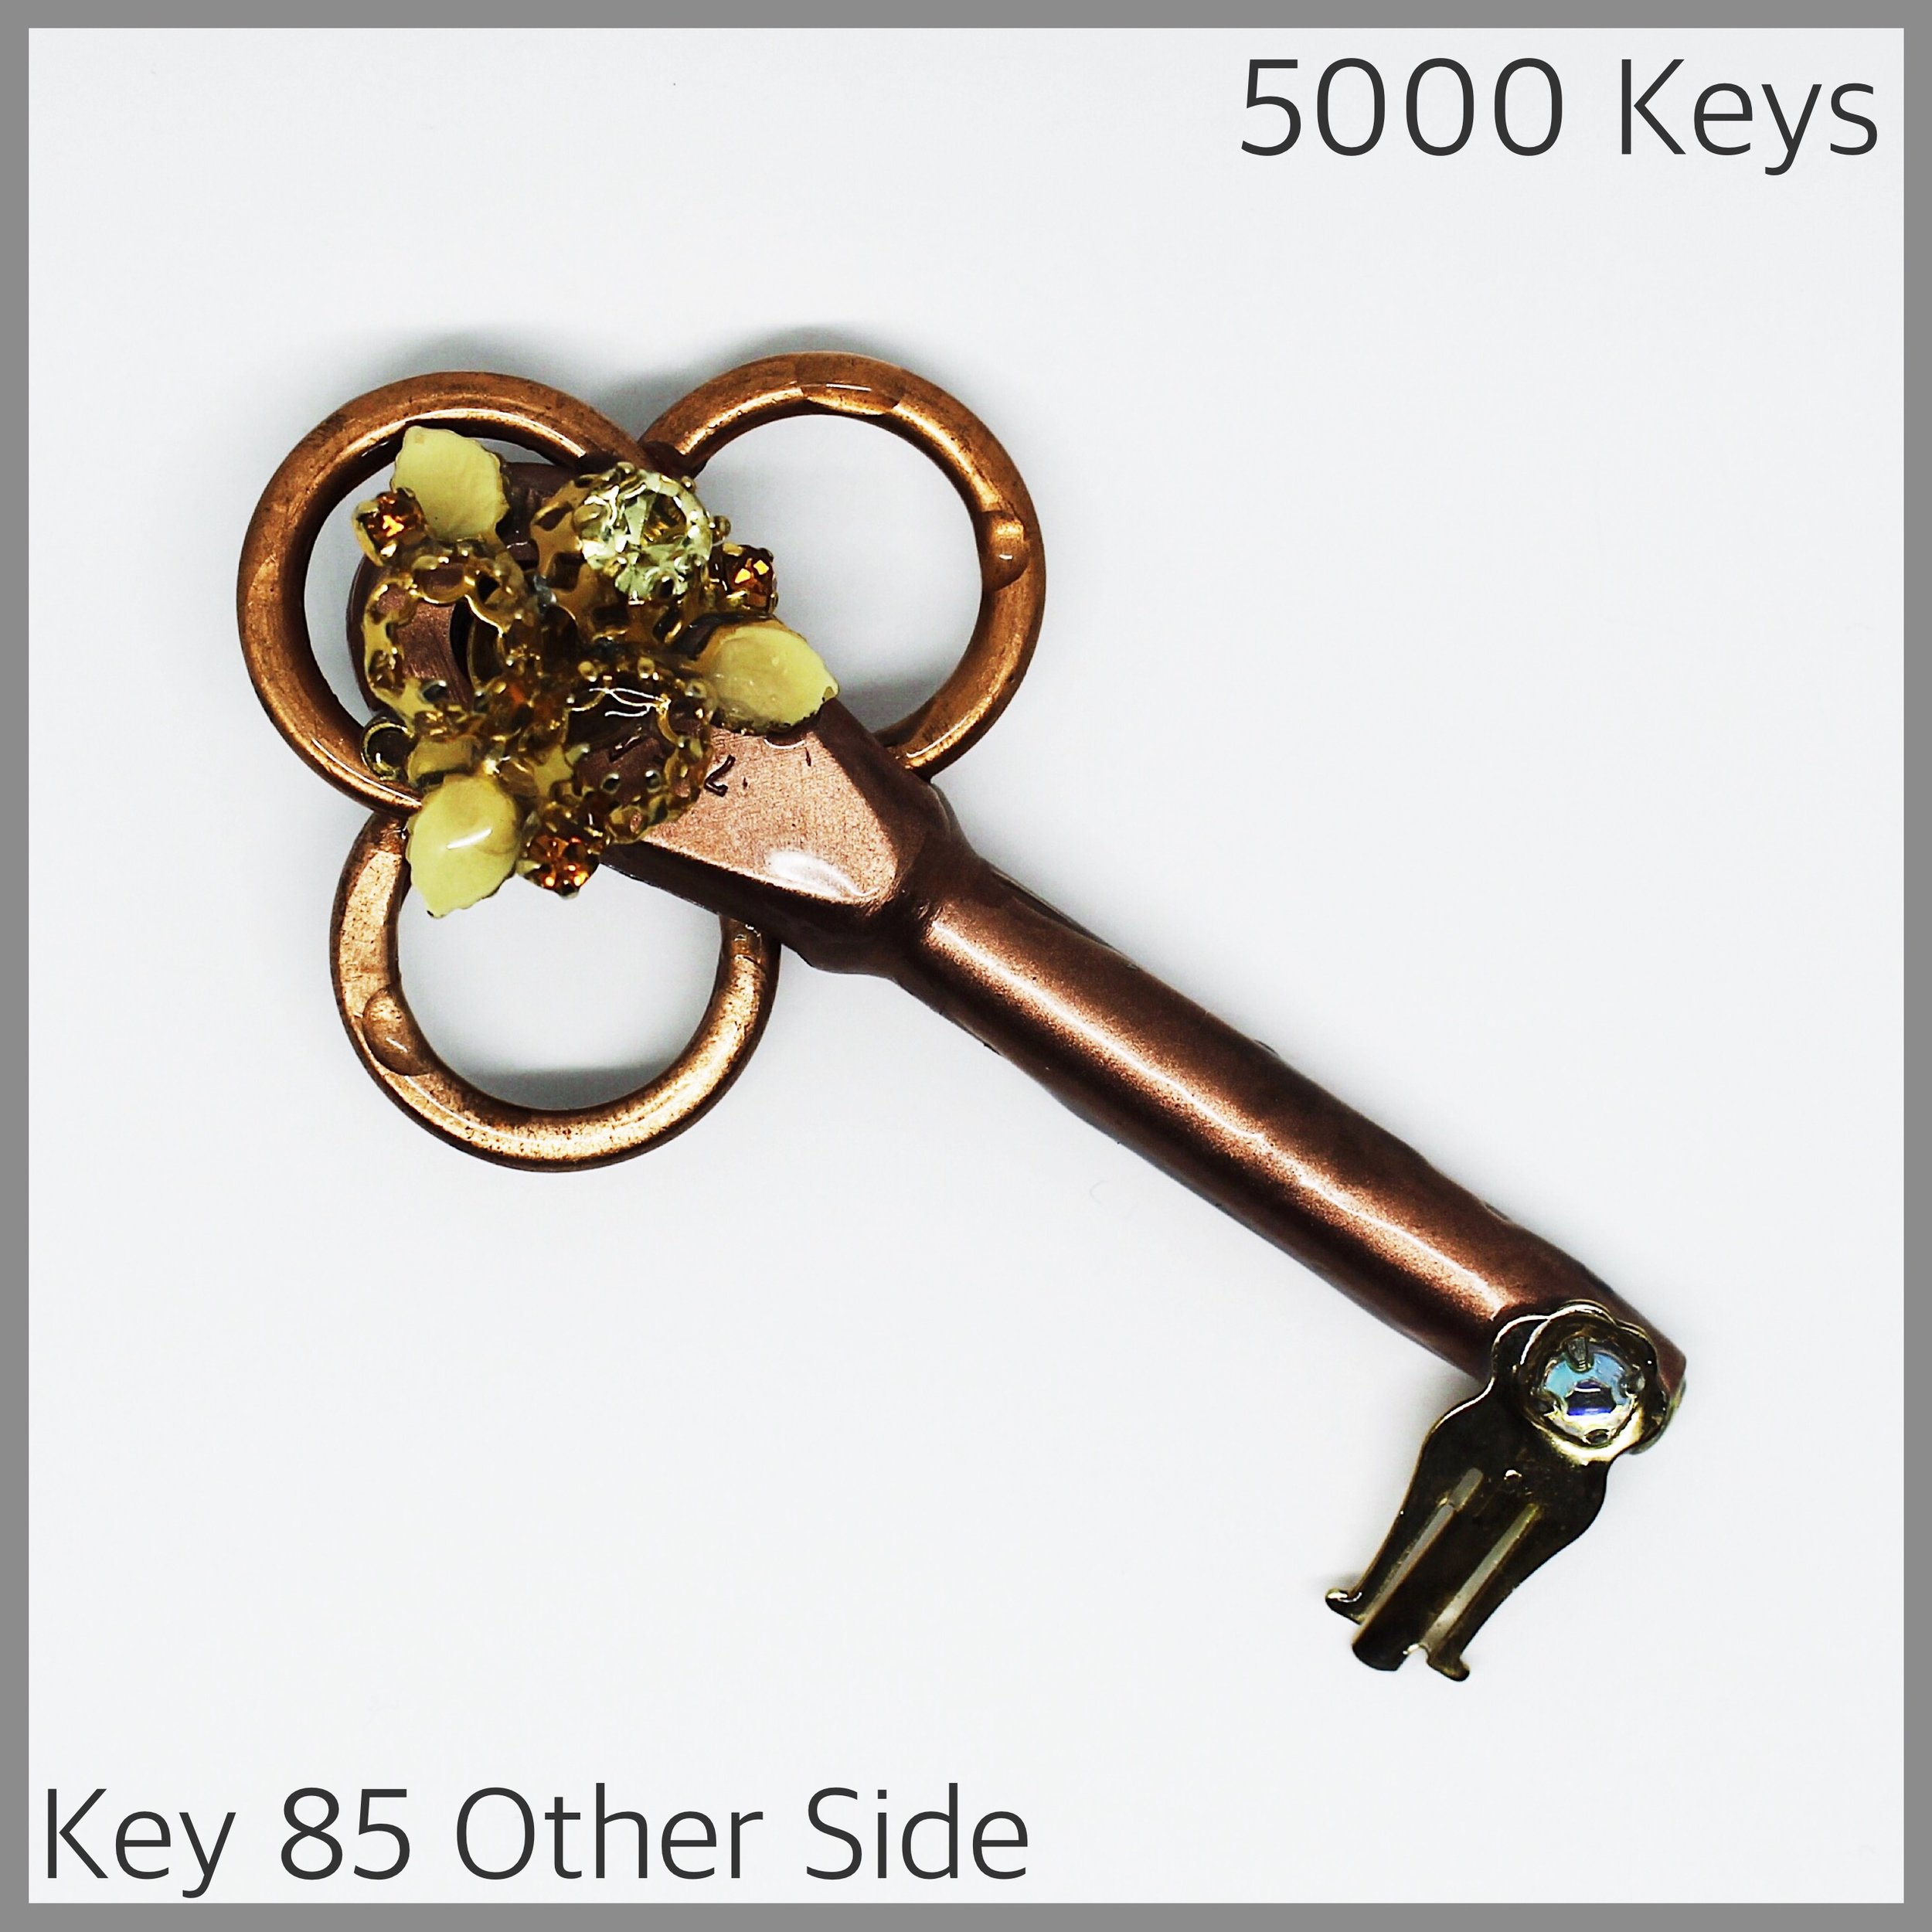 Key 85 other side - 1.JPG